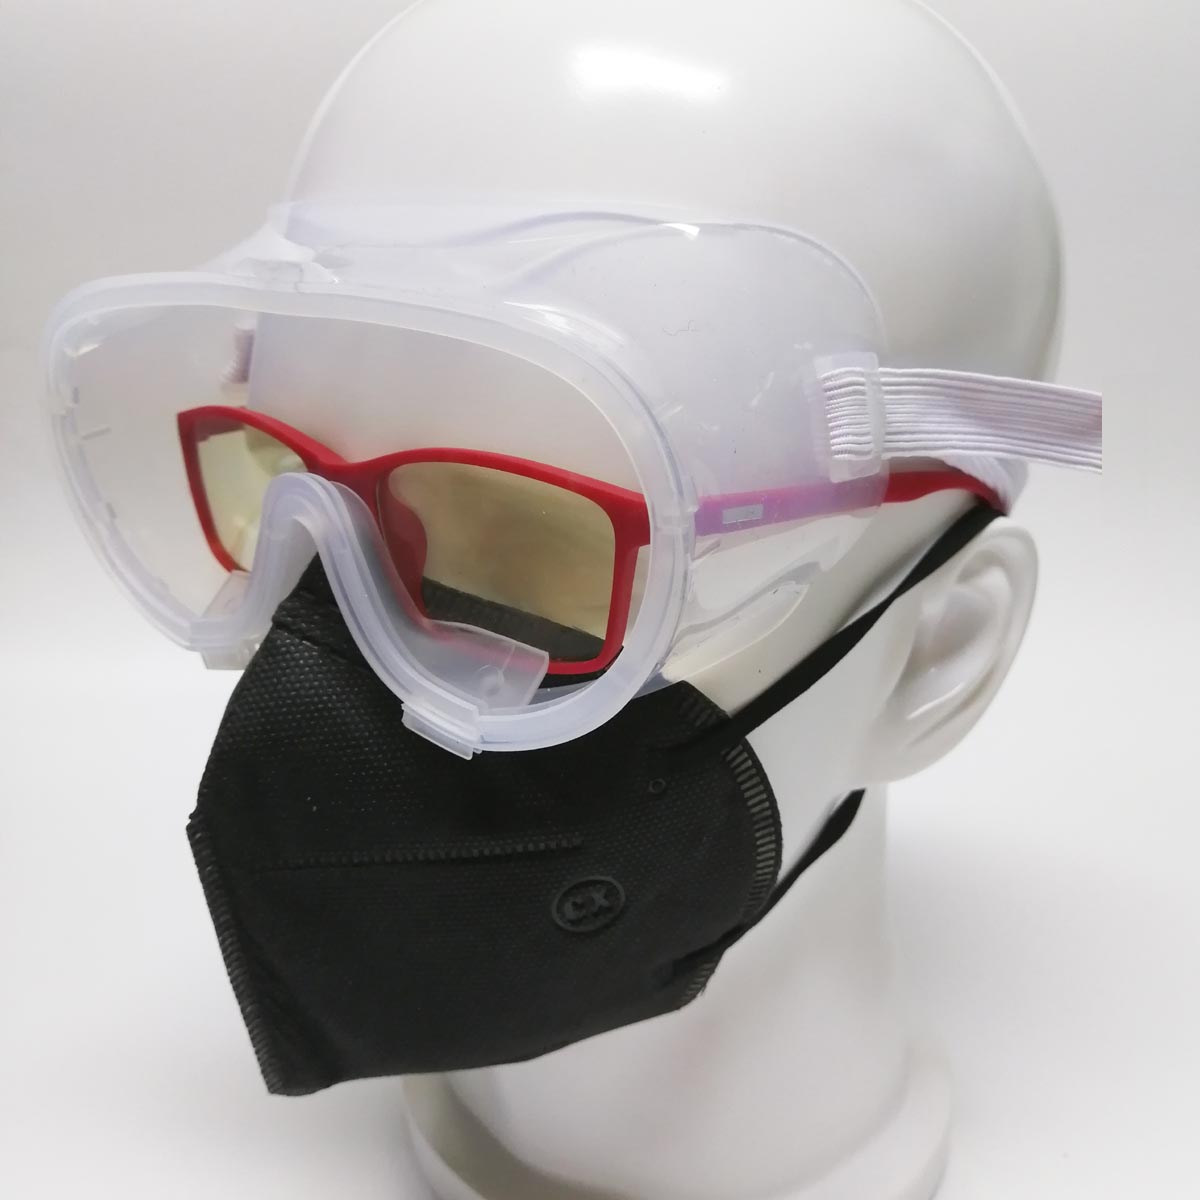 Protective goggles 4.jpg